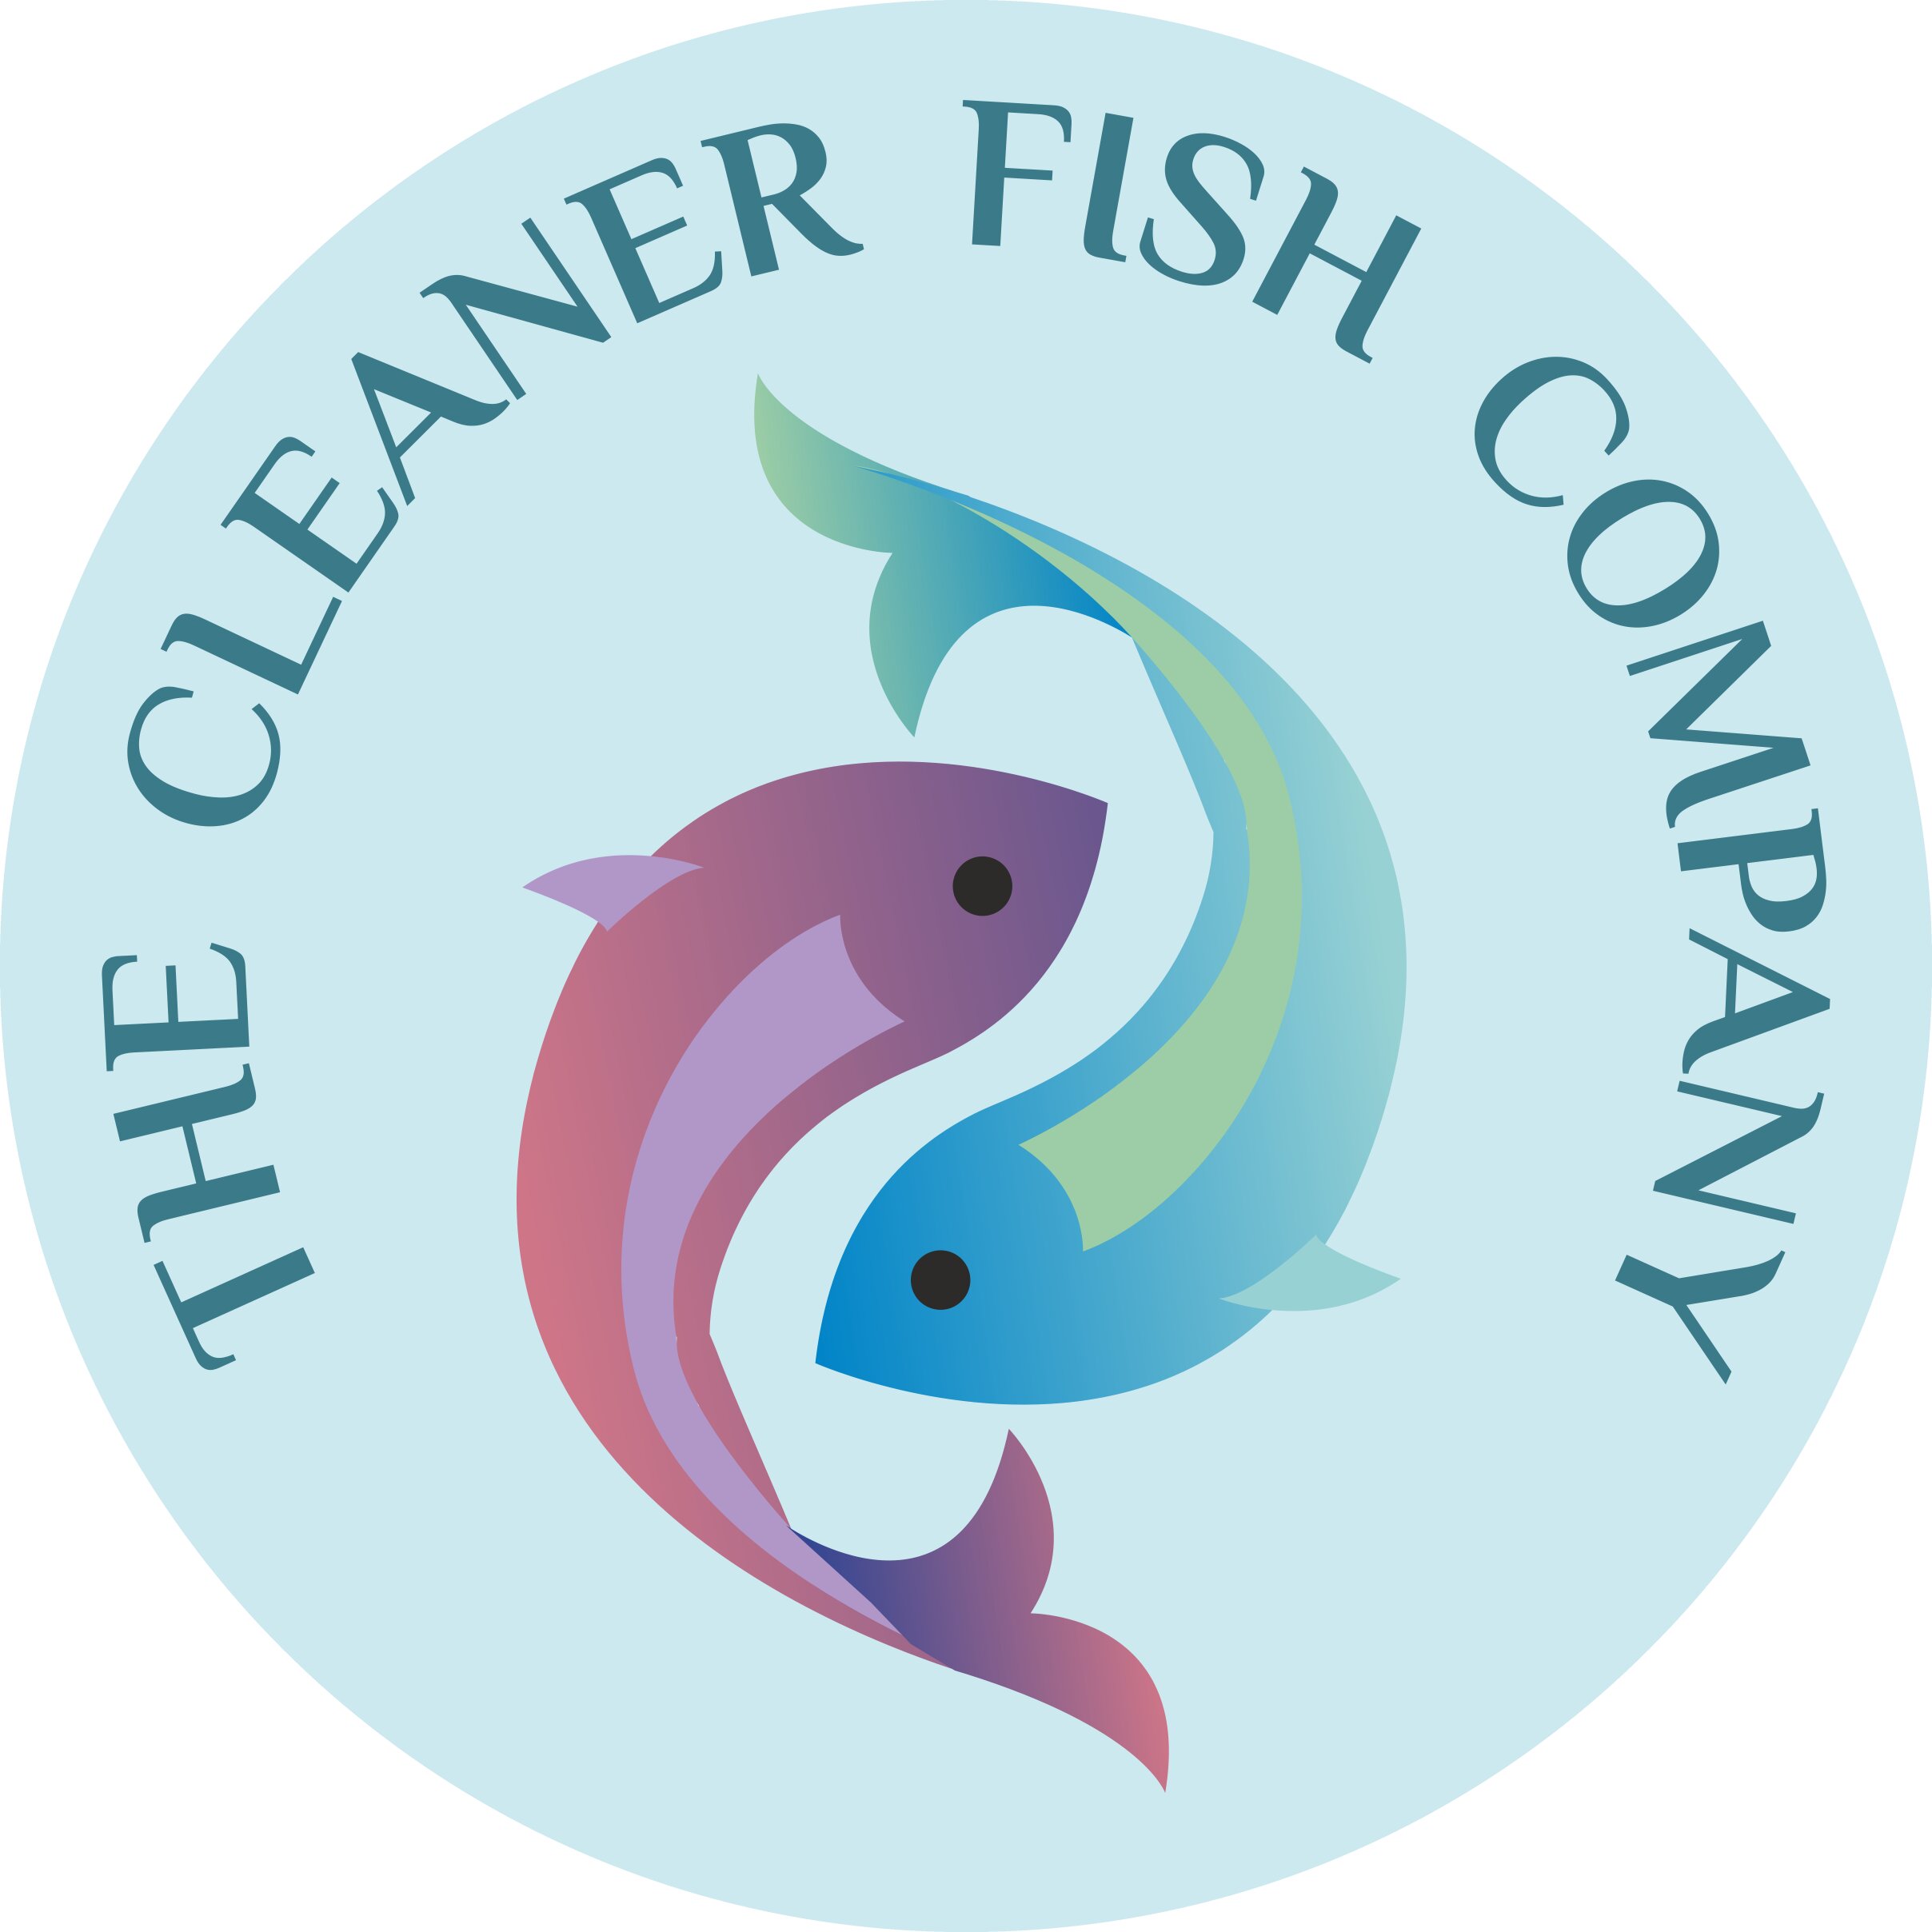 Cleaner Fish Company logo